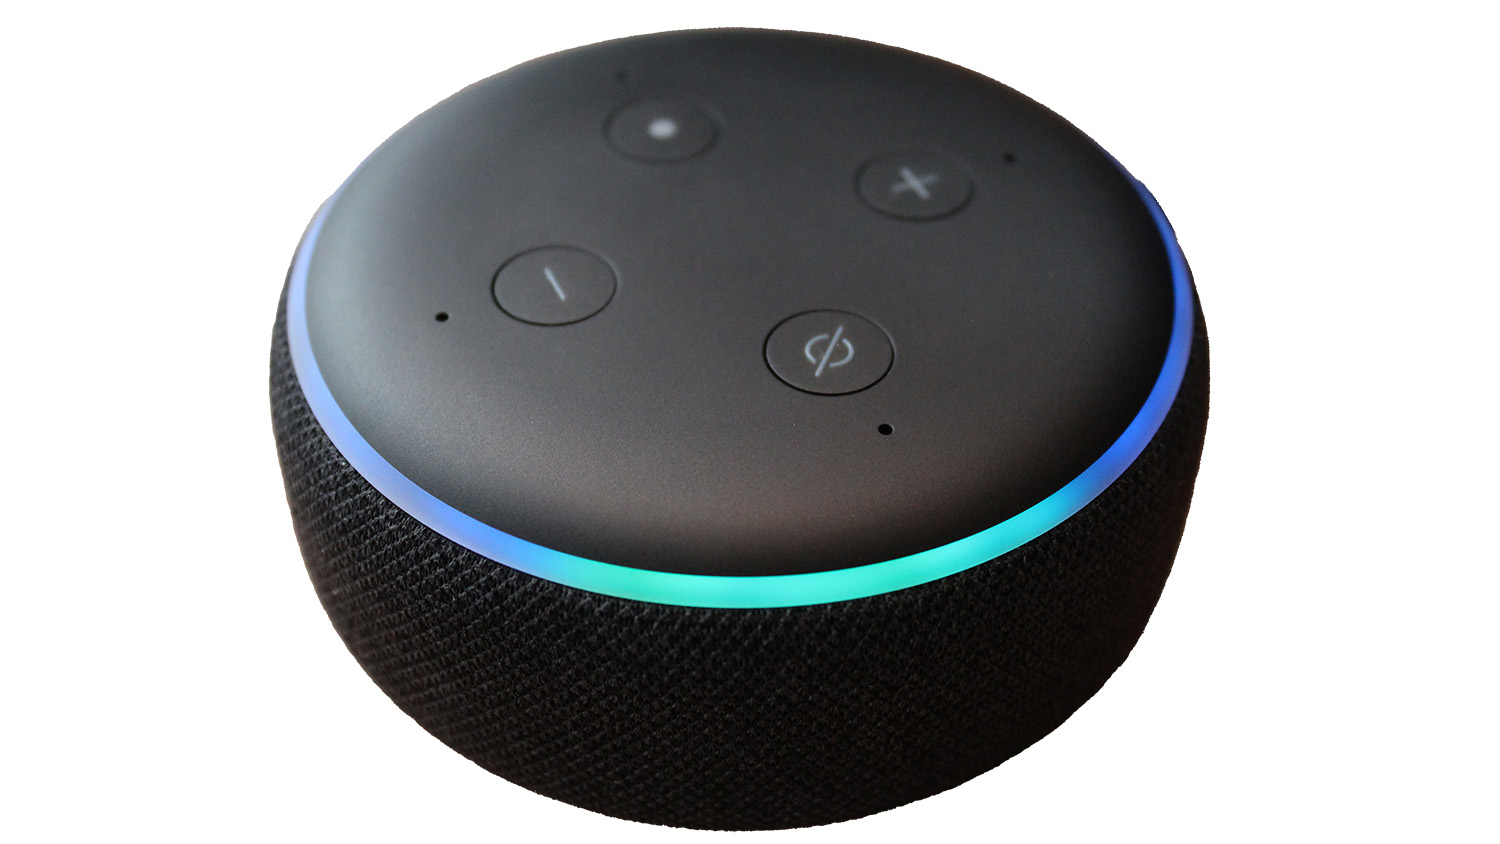 image of Amazon Alexa device